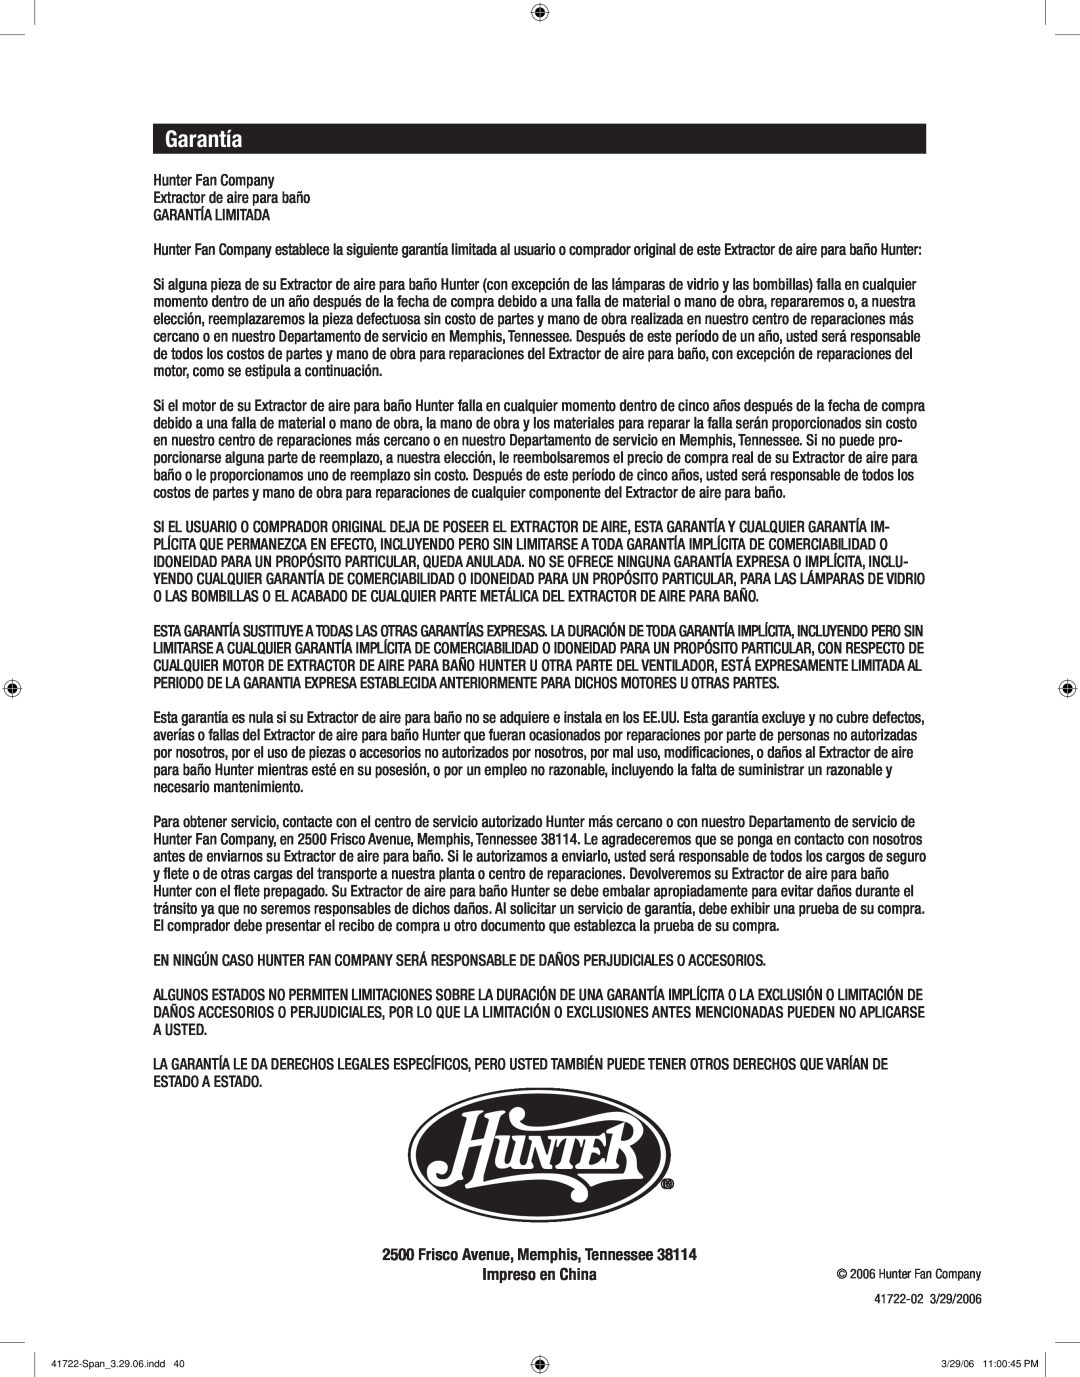 Hunter Fan 90063, 90064 manual Garantía, Frisco Avenue, Memphis, Tennessee Impreso en China 